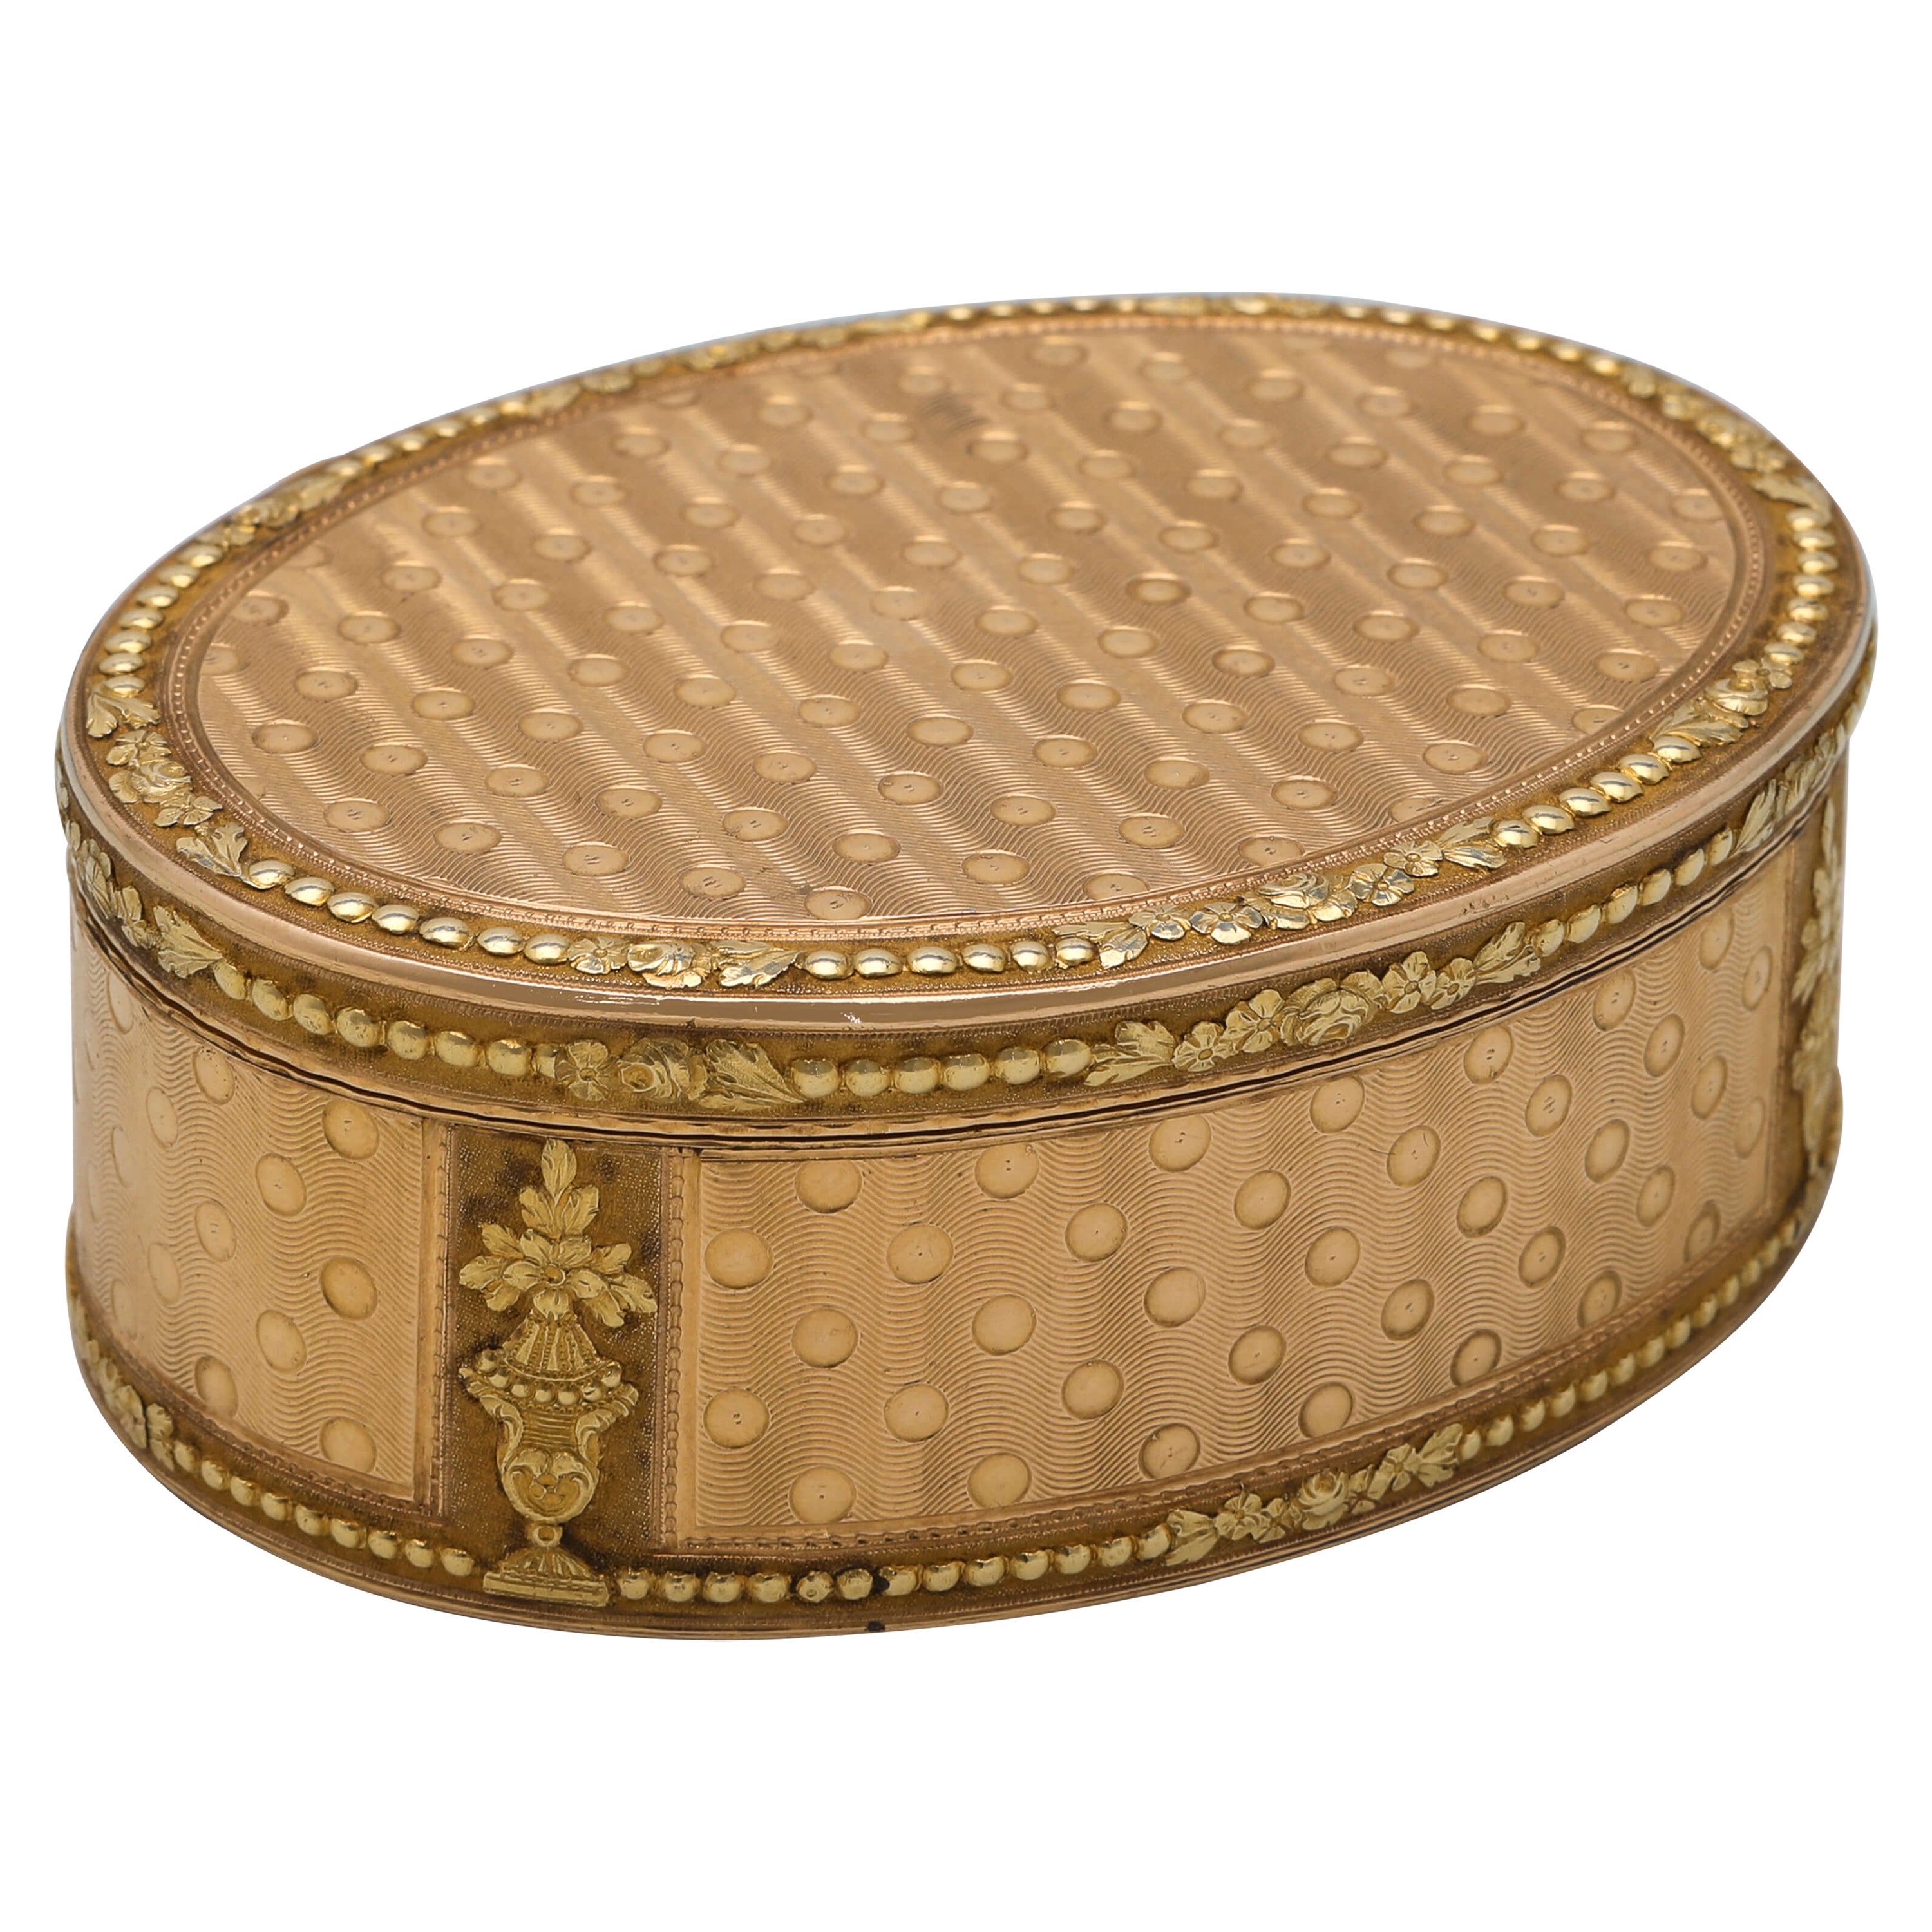 Circa 1790 - Stunning 2 Colour 18ct Gold Snuff Box - Les Fréres Souchay of Hanau